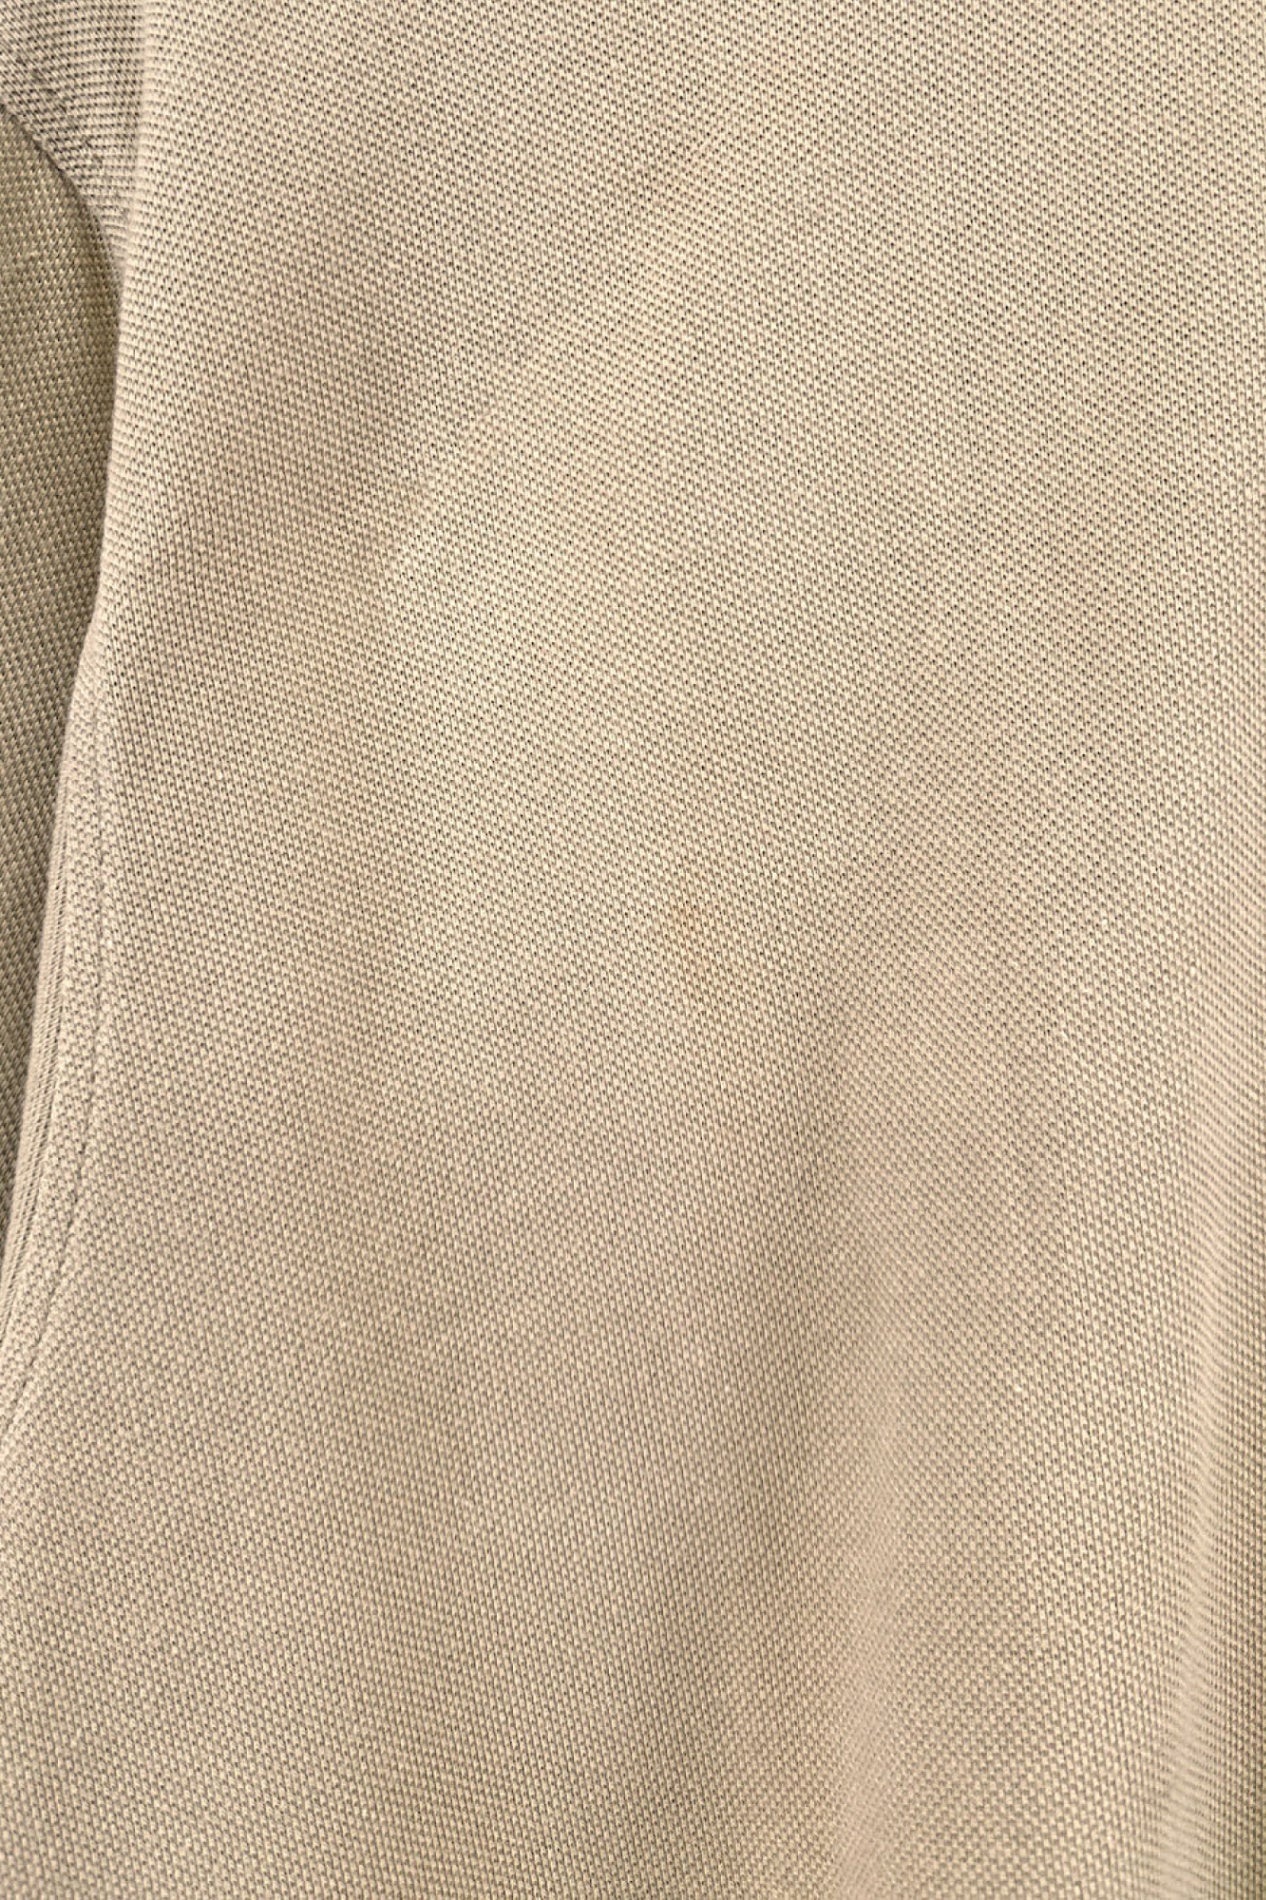 90 年代 Burberrys Polo 衫